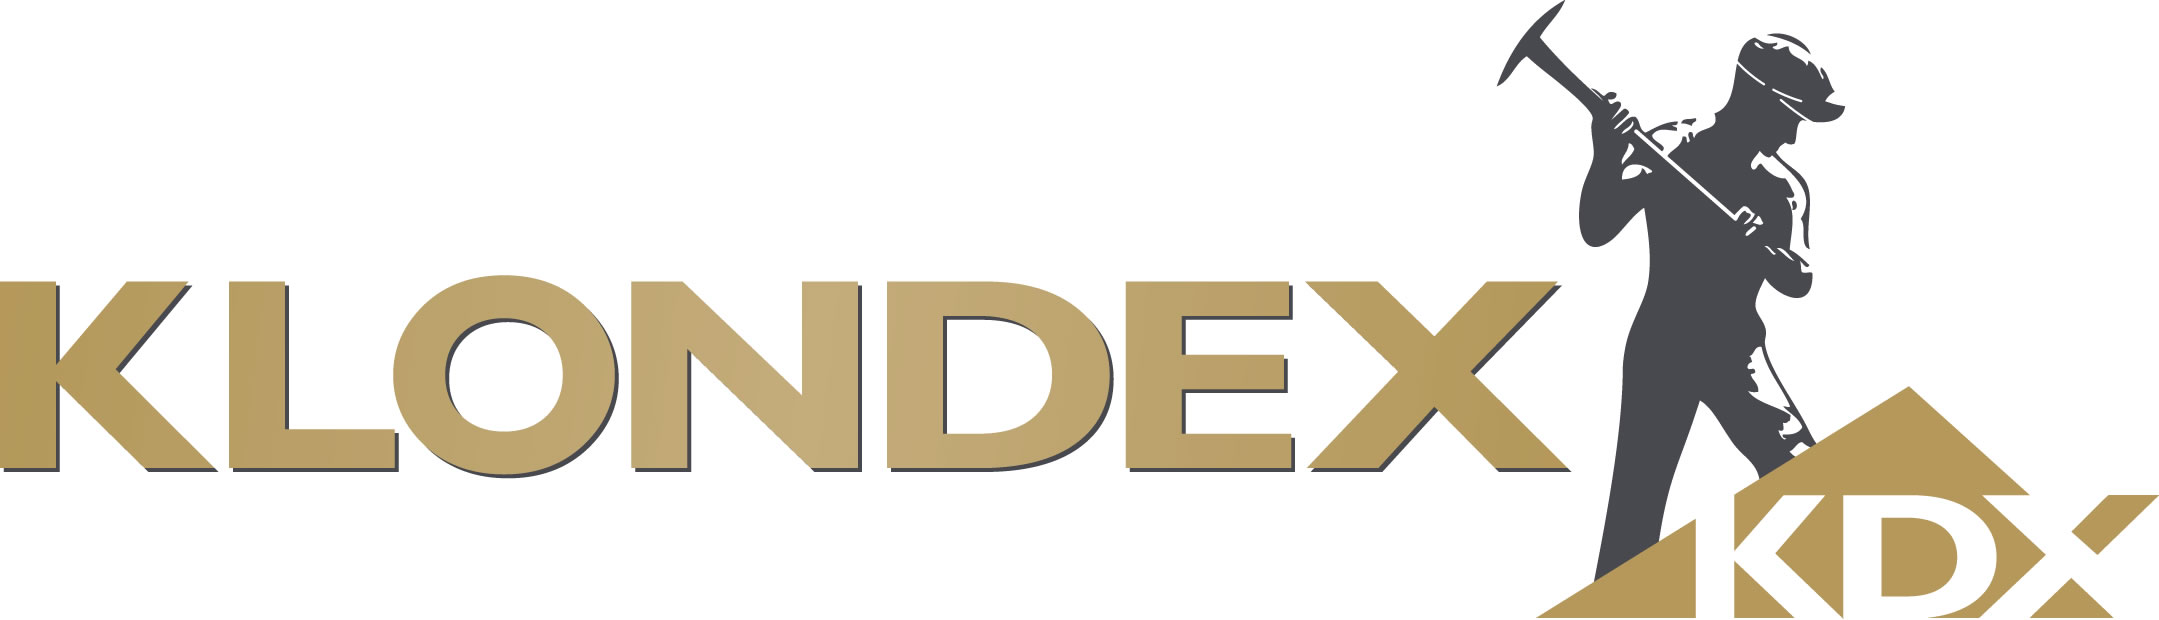 Klondex Provides Exp